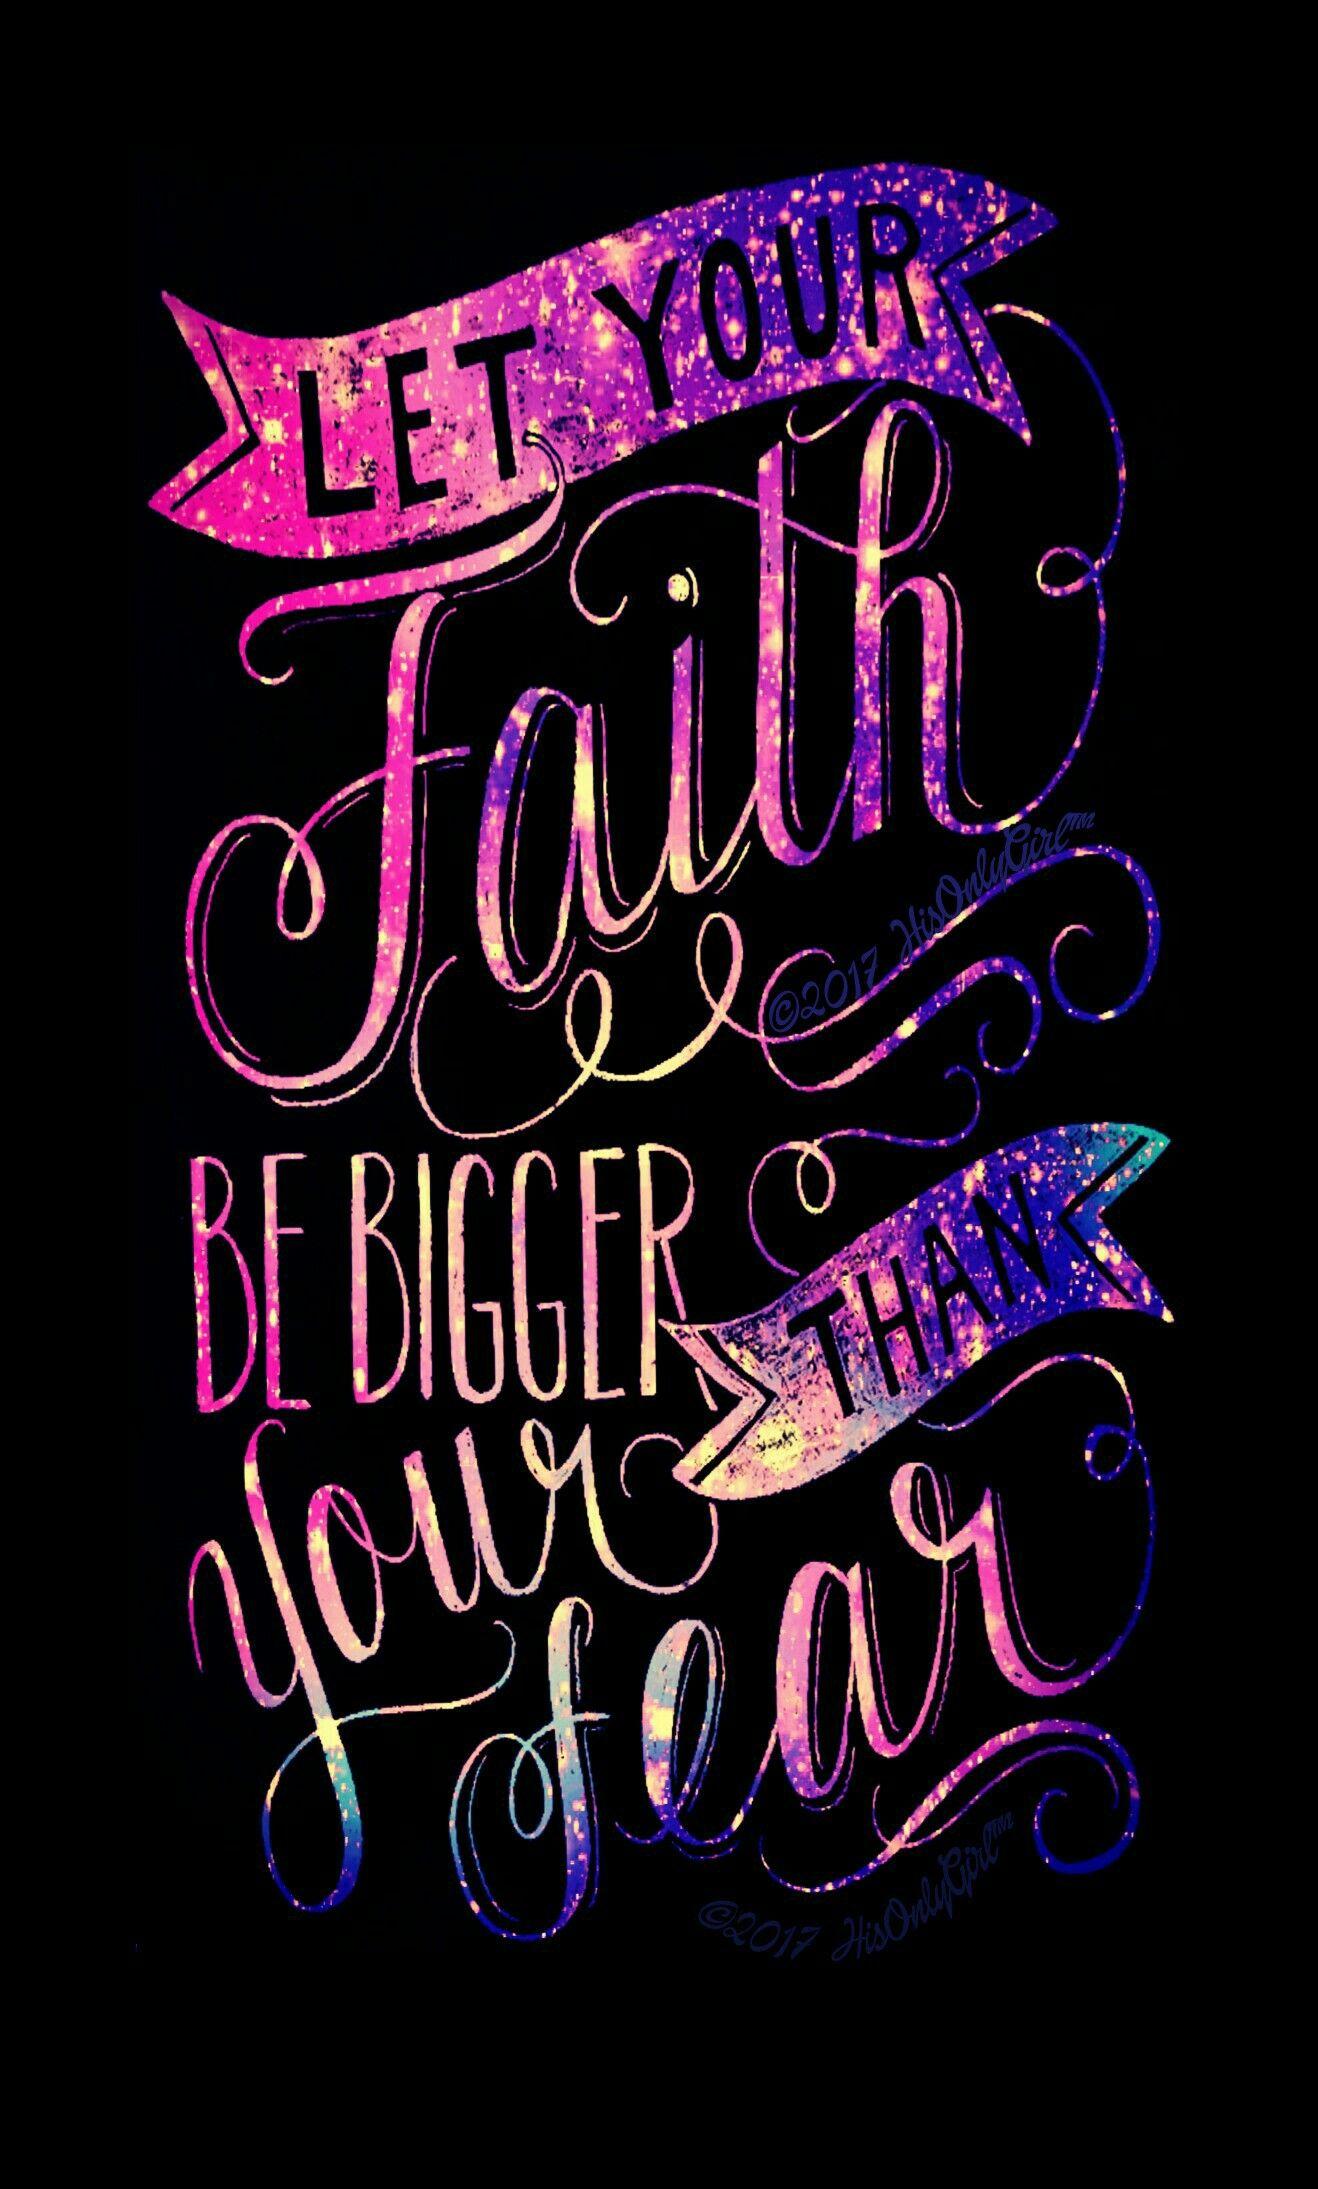 FAITH over FEAR galaxy wallpaper I created for the app CocoPPa